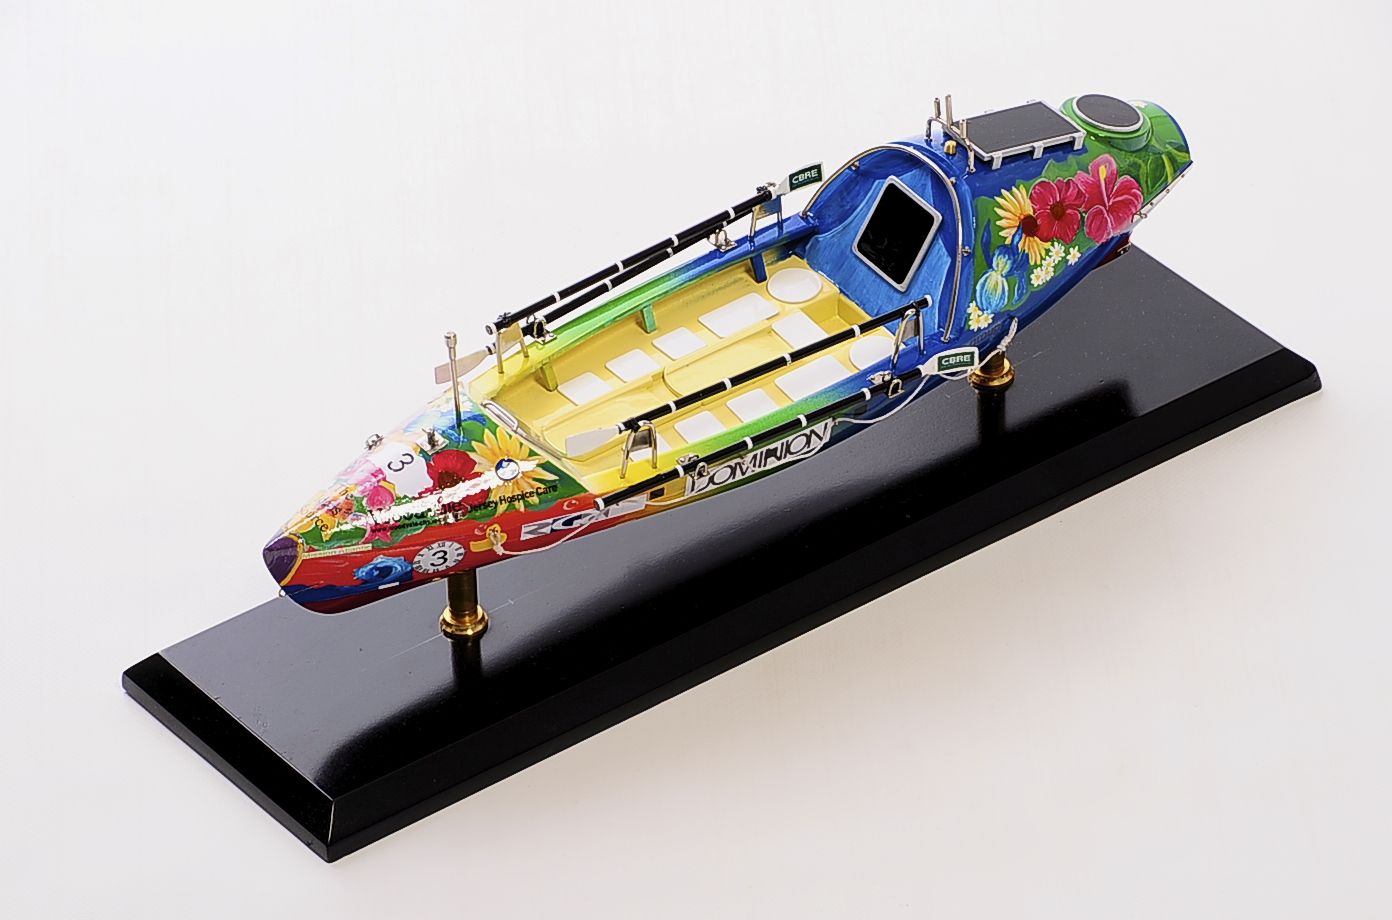 Ocean Rowing Boat Model